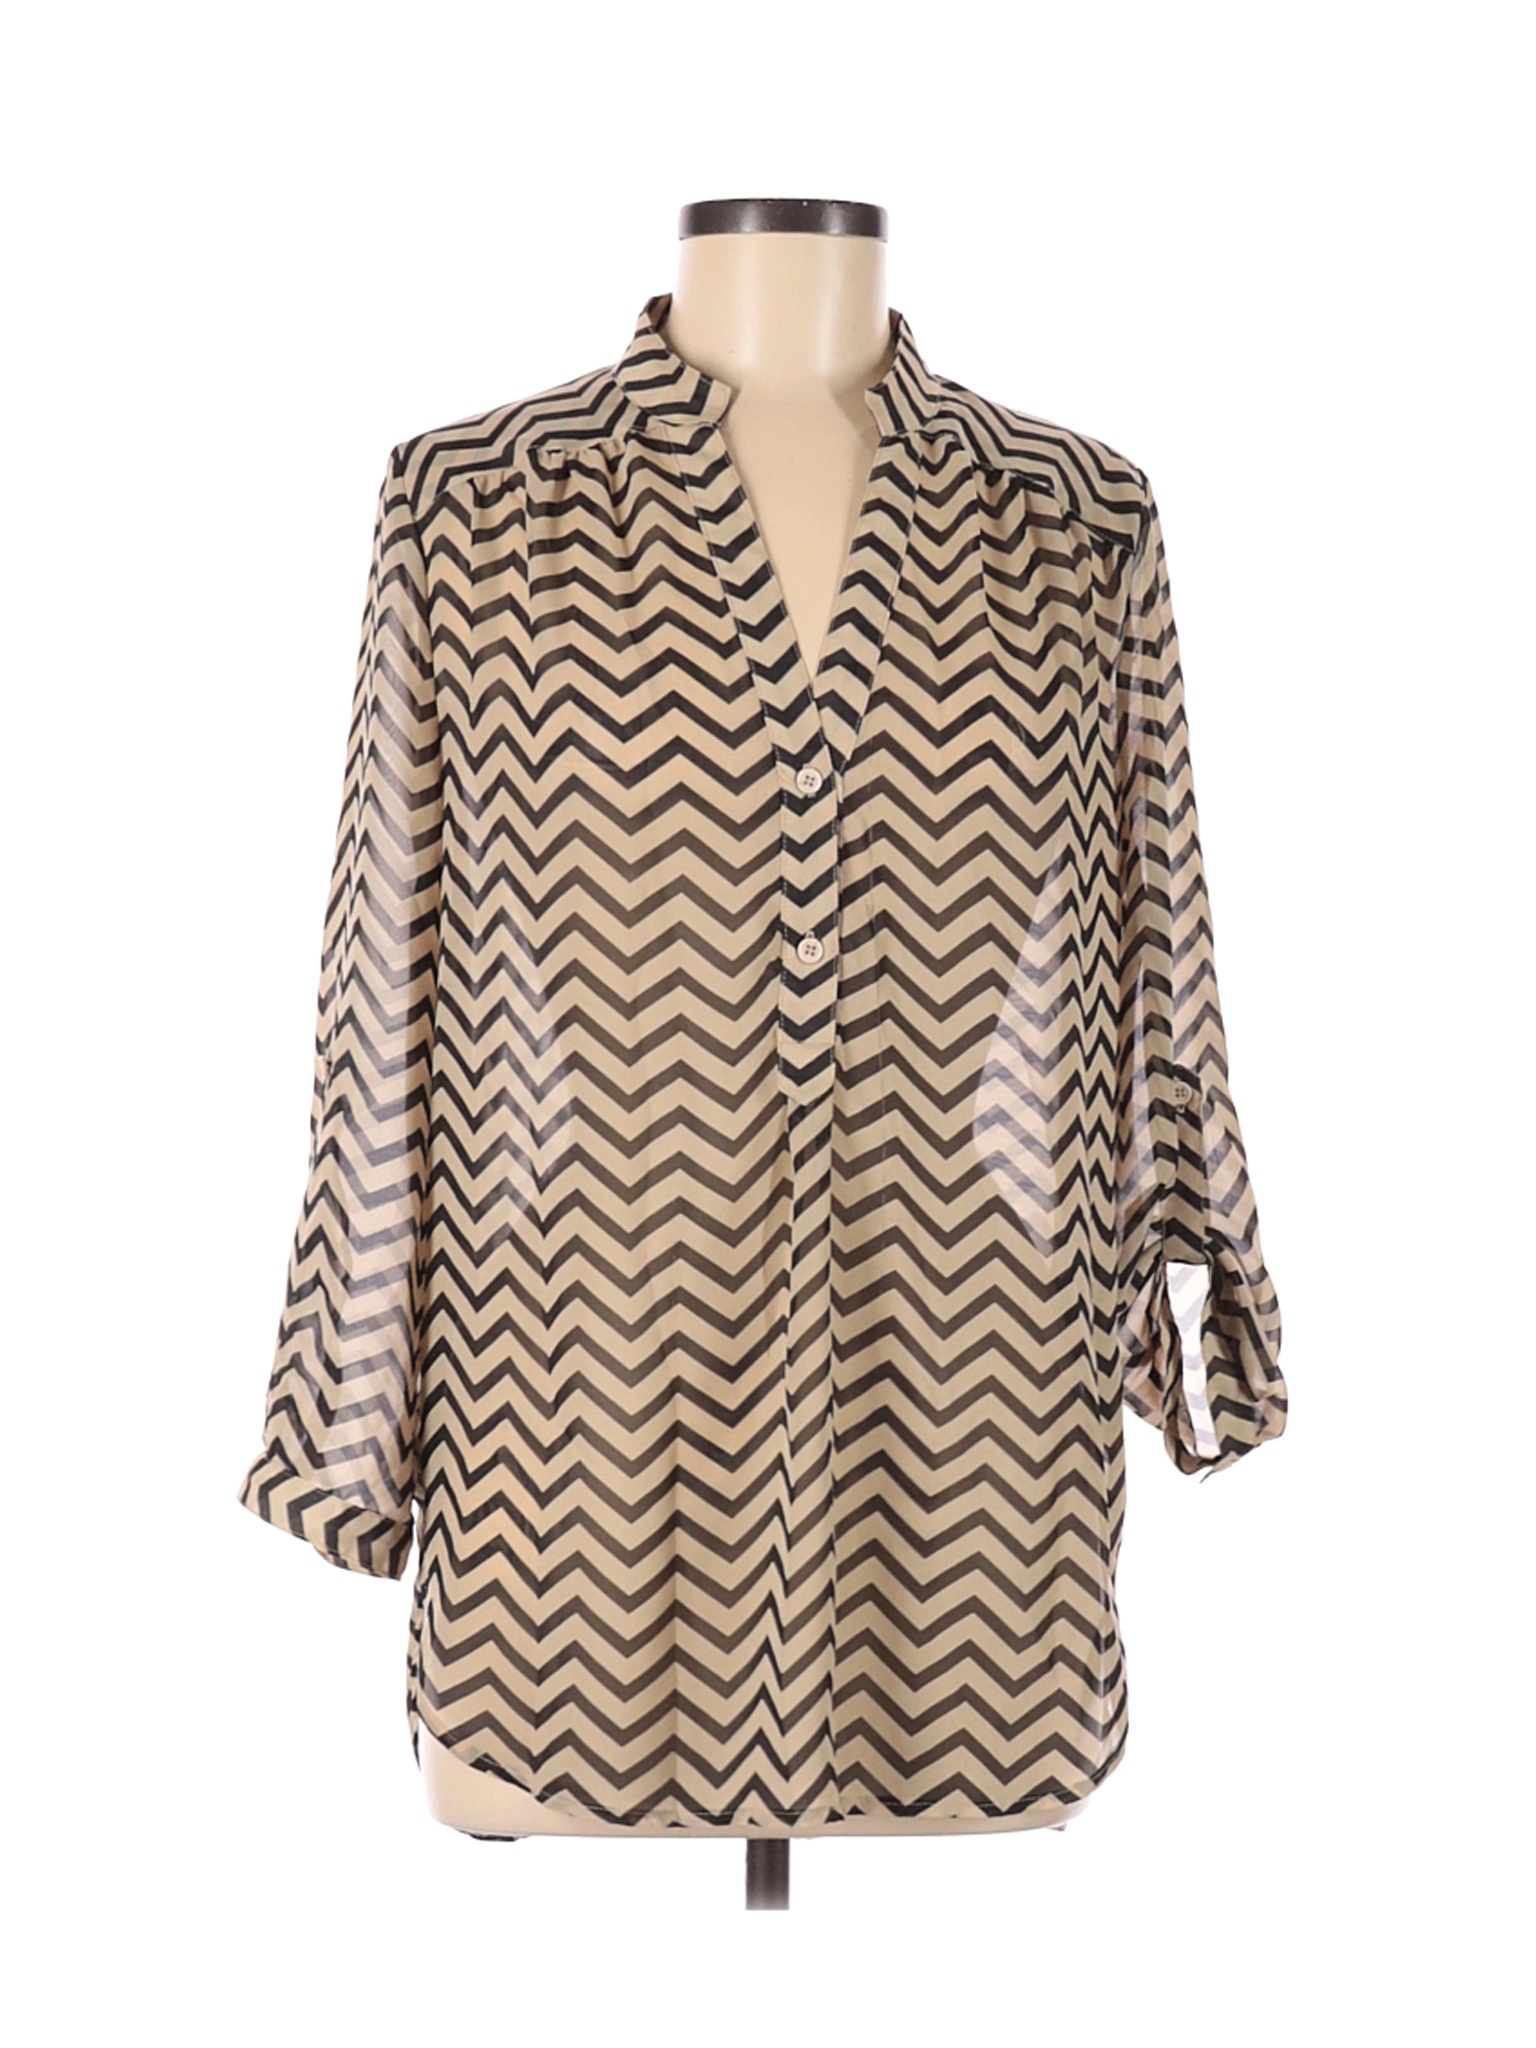 Tacera Women Brown Long Sleeve Blouse M | eBay